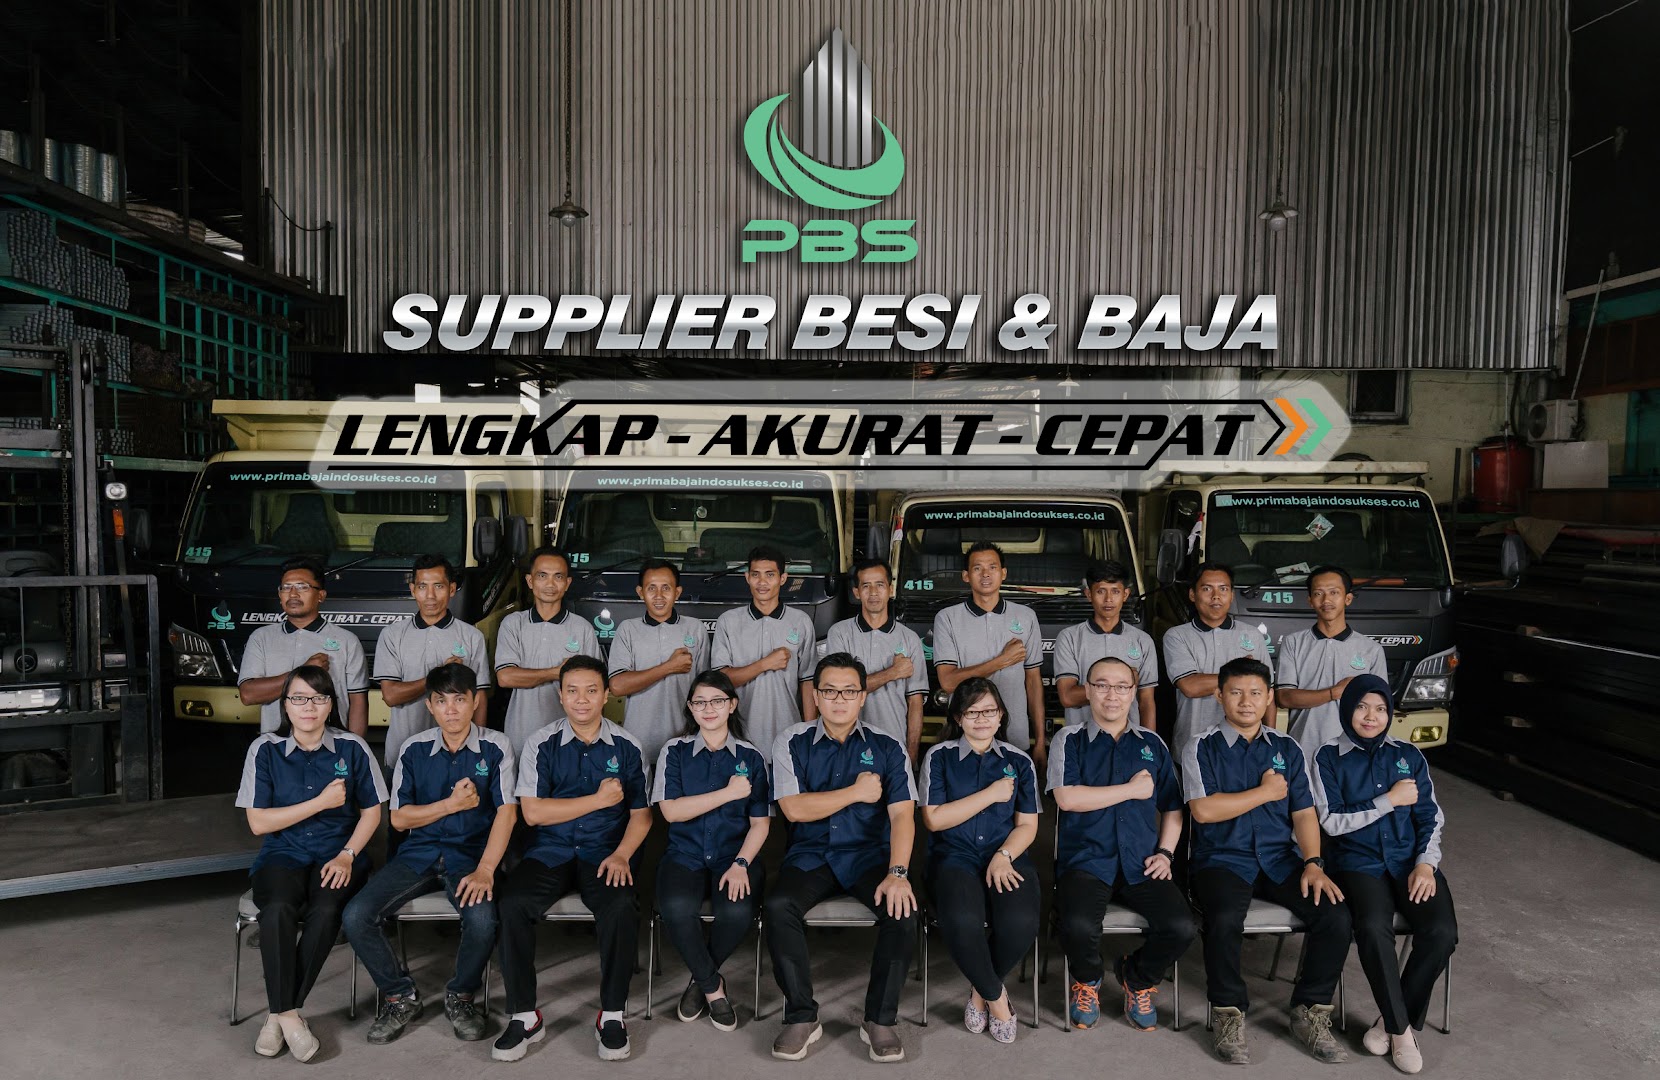 Prima Bajaindo Sukses - Distributor & Supplier Besi & Baja - Tangerang Photo